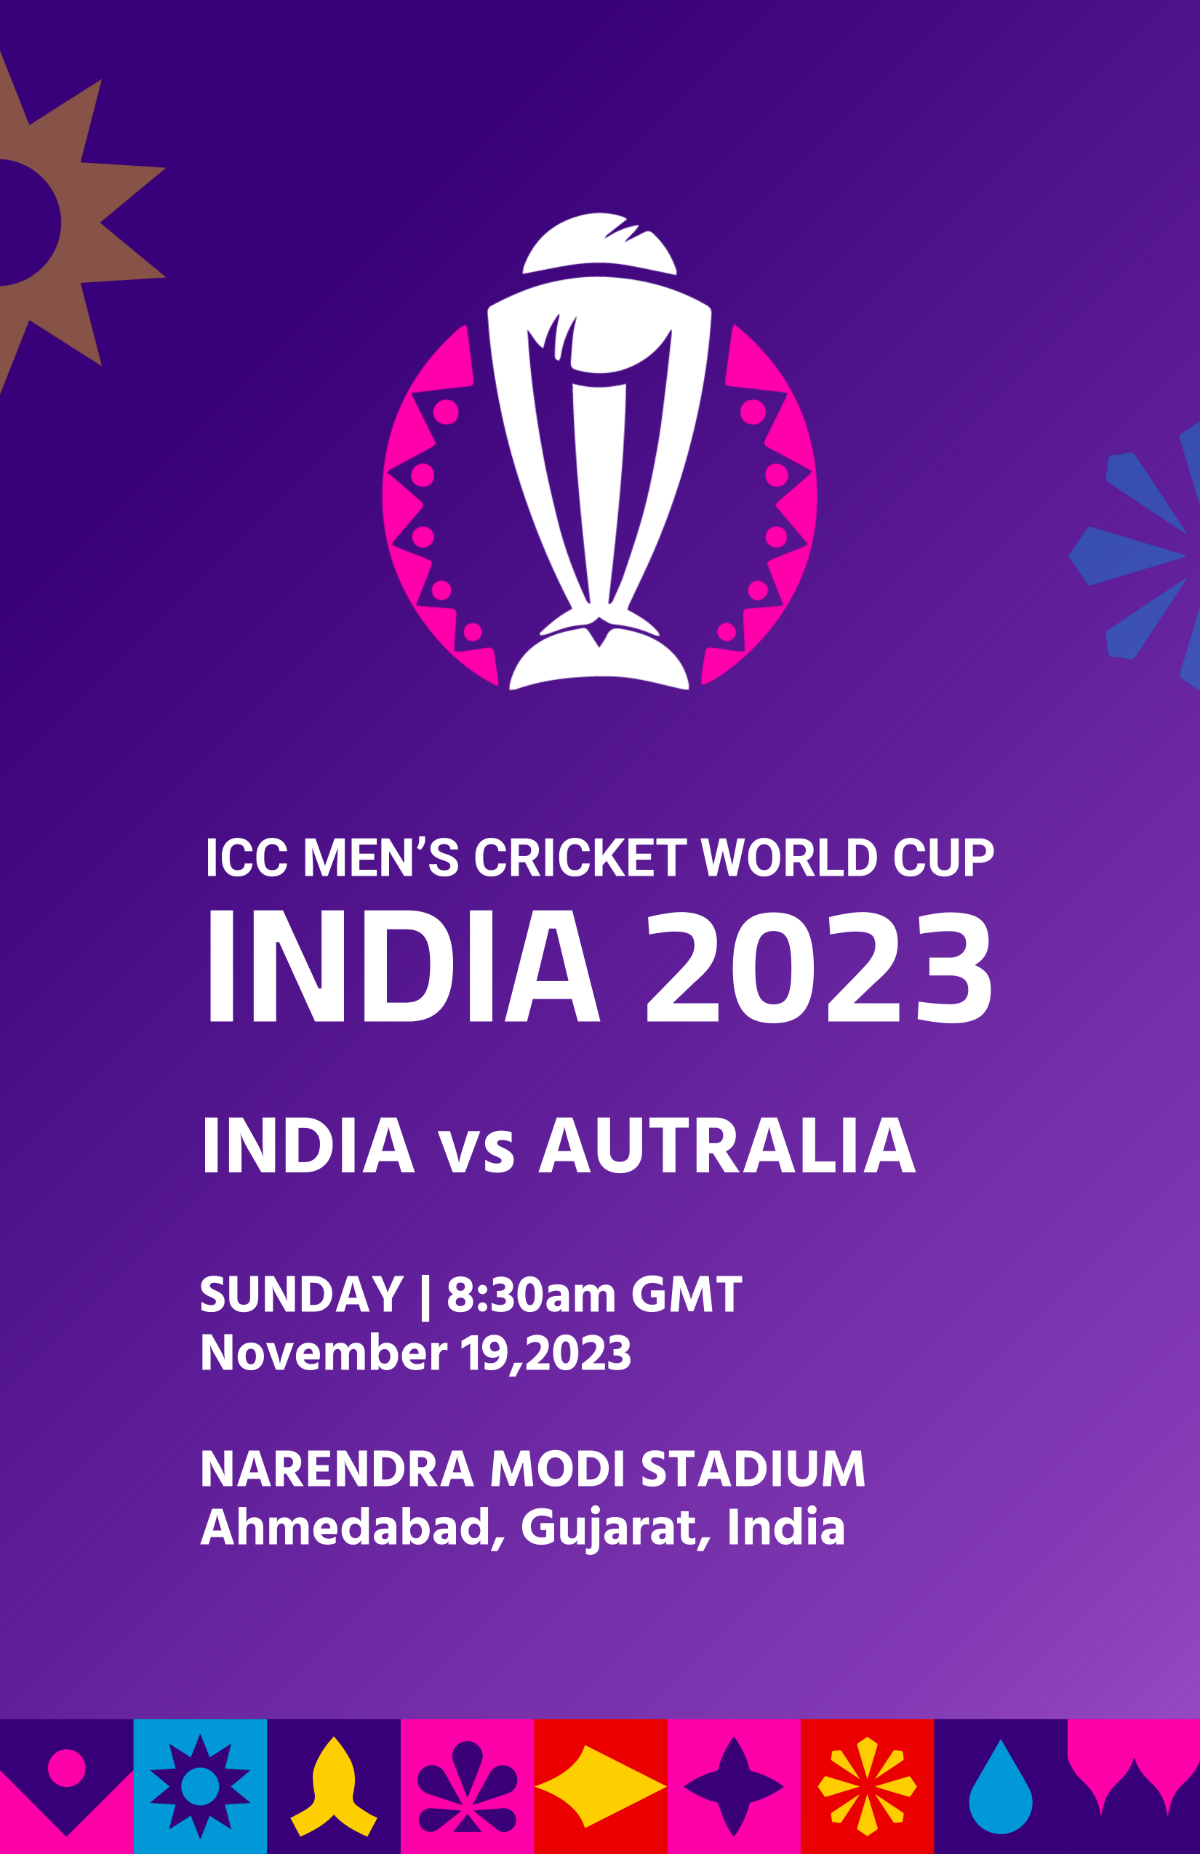 2023 ICC Men's Cricket World Cup Schedule Poster Template